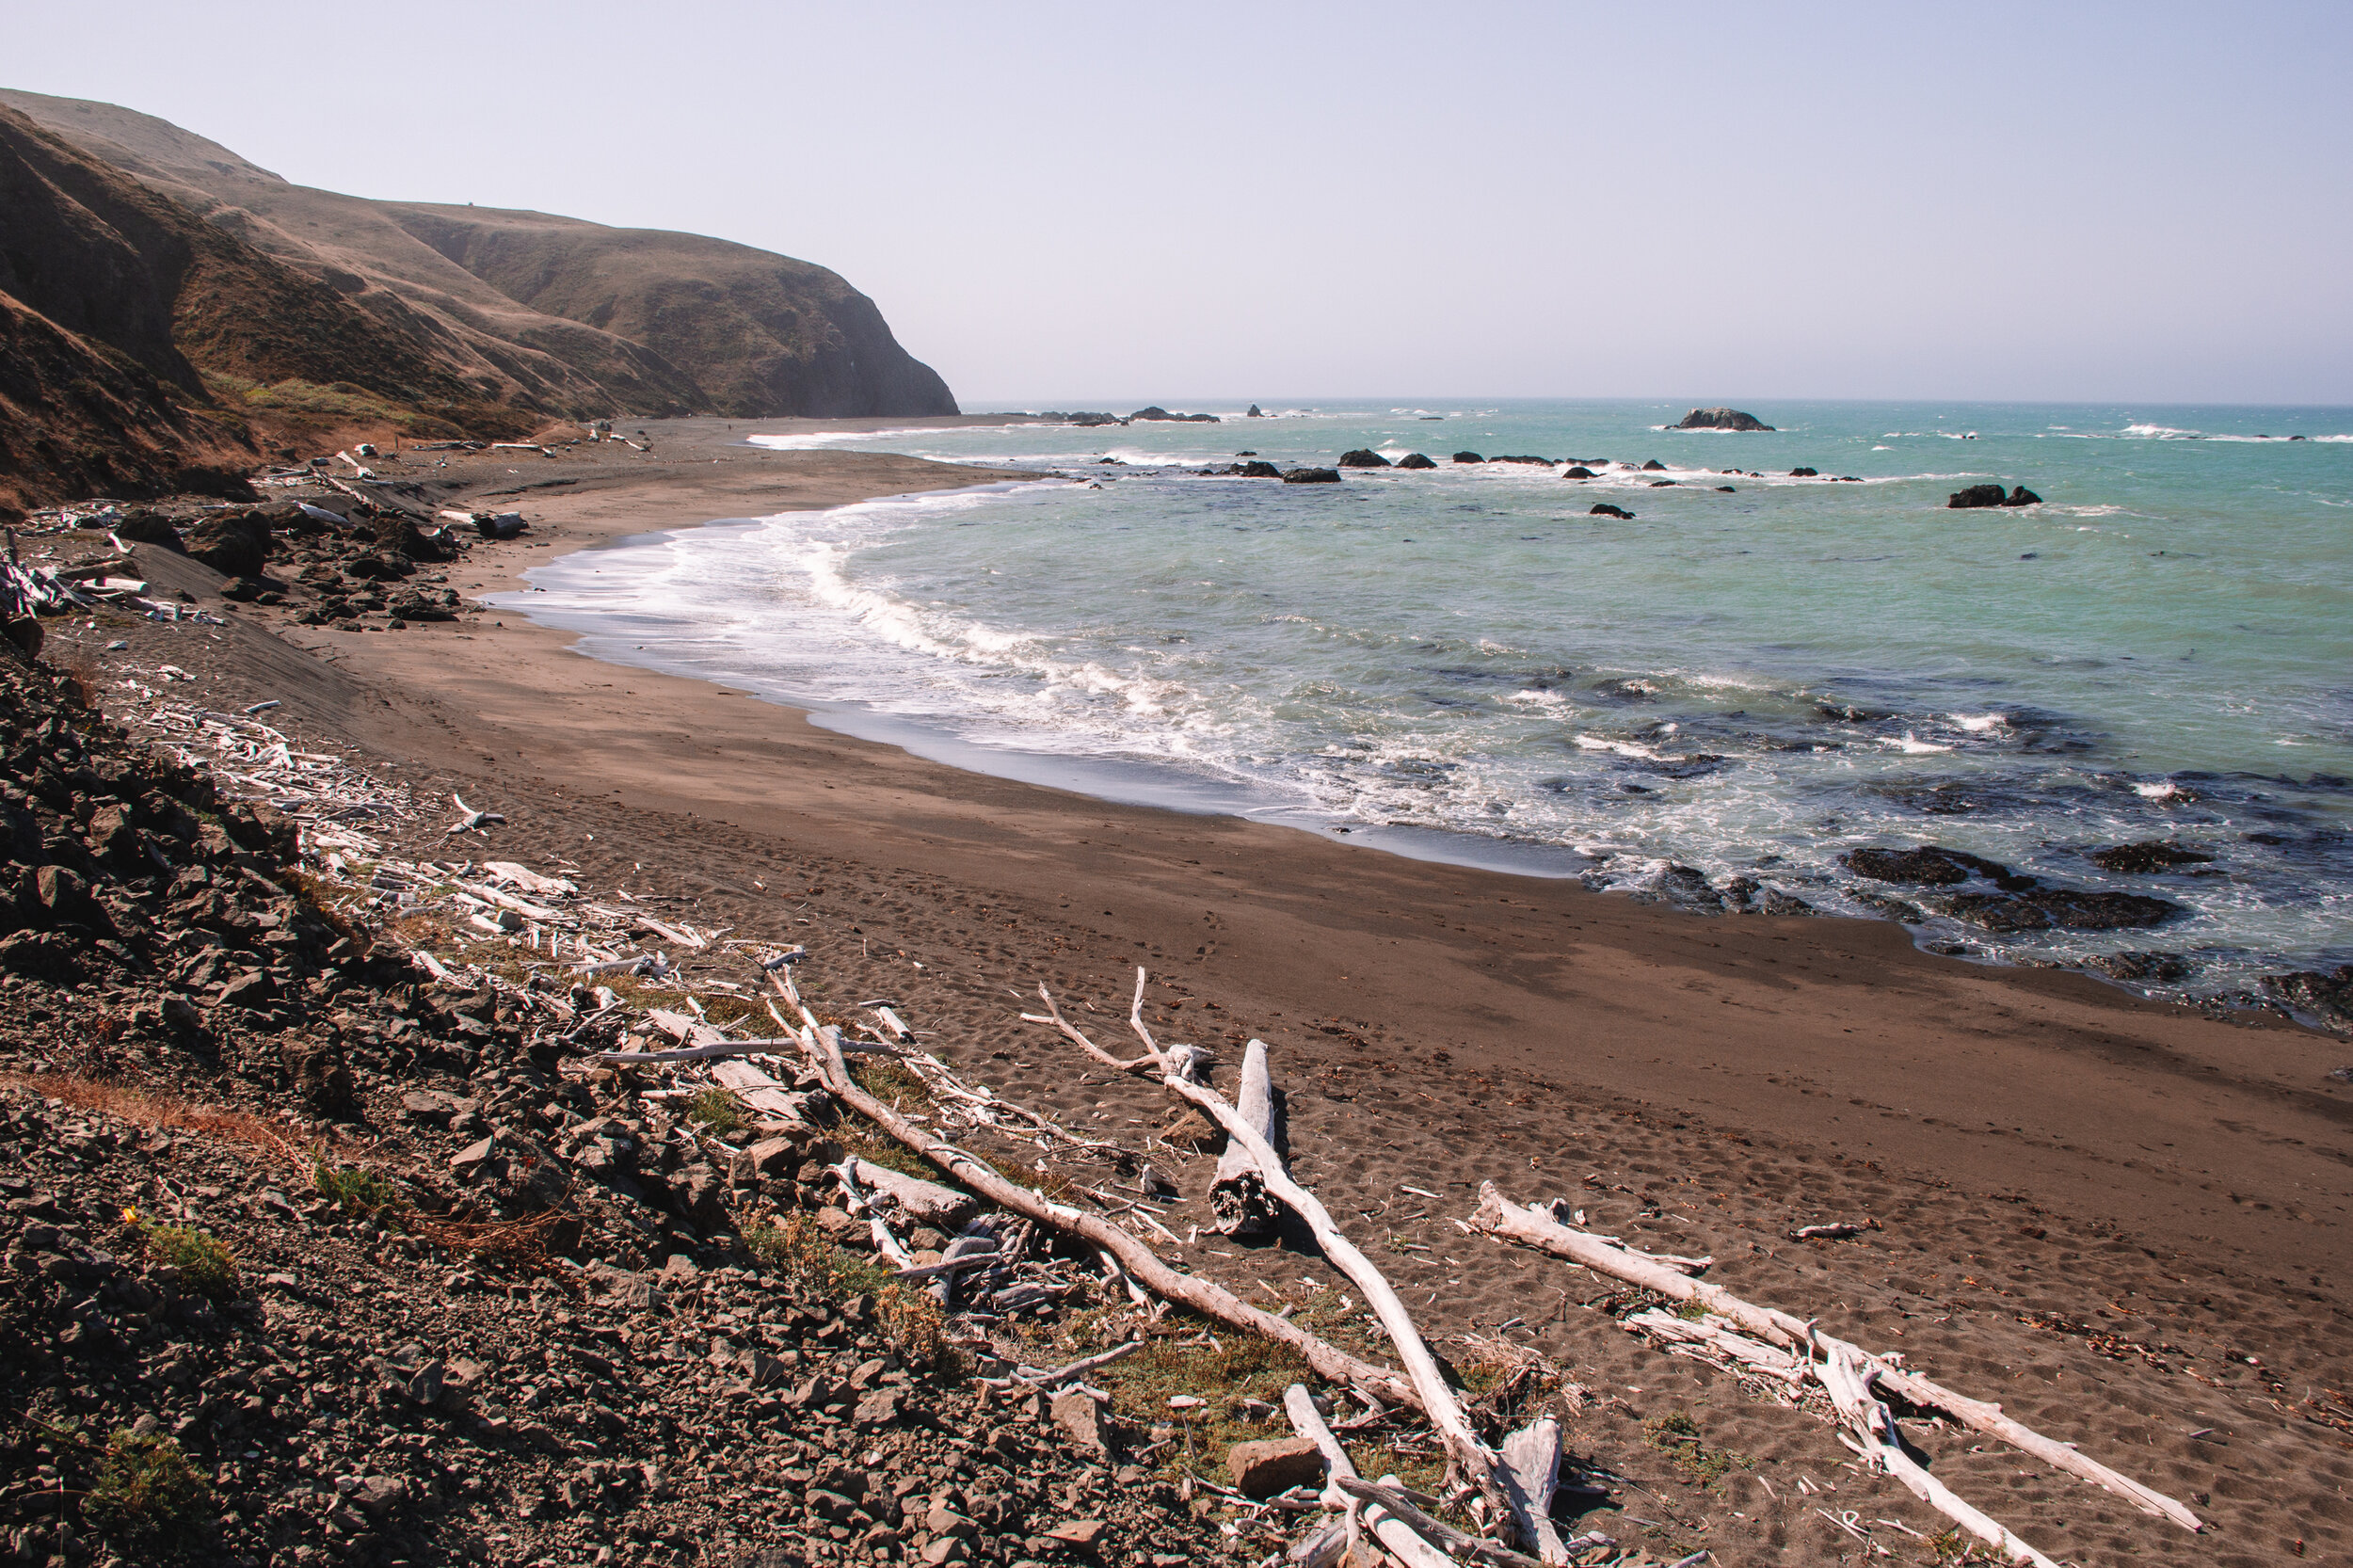 The wild, desolate Lost Coast of Northern California